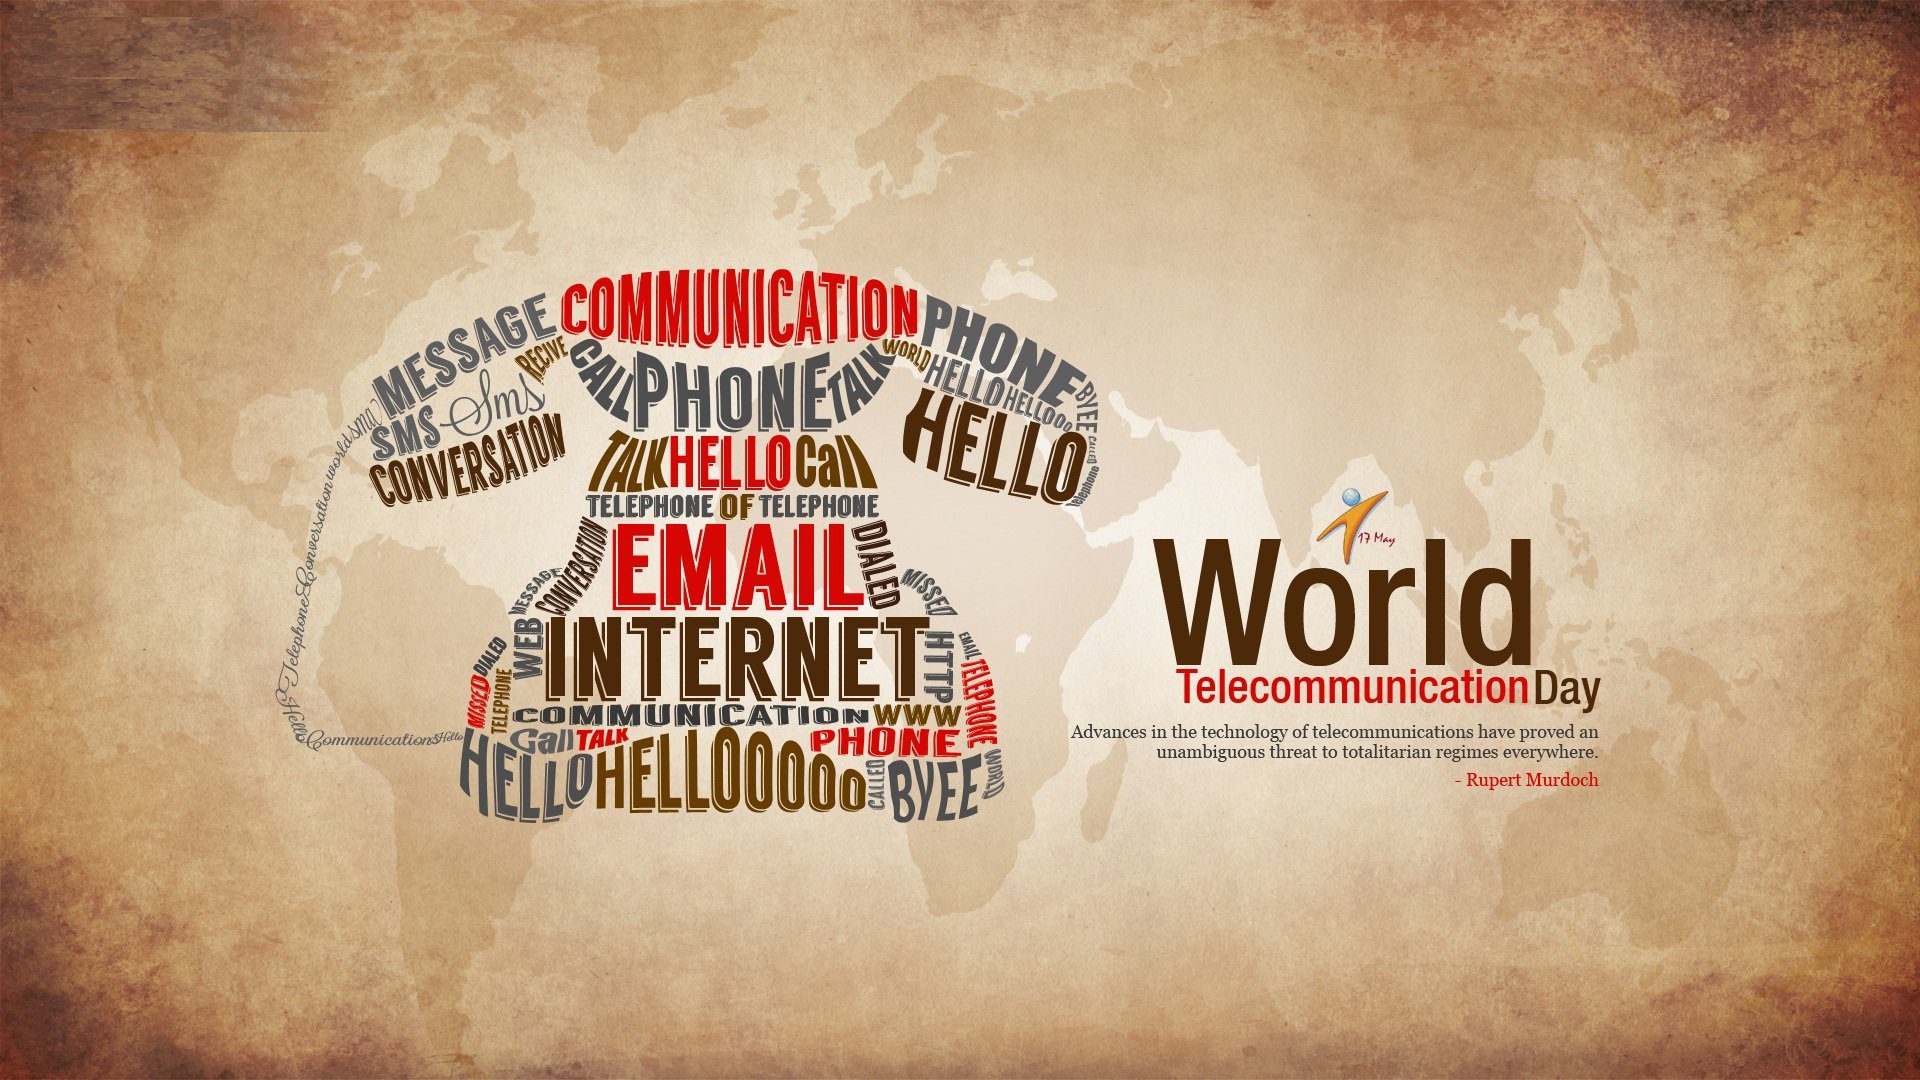 World Telecommunication Day 2020: Date, Theme, History and Amazing Facts